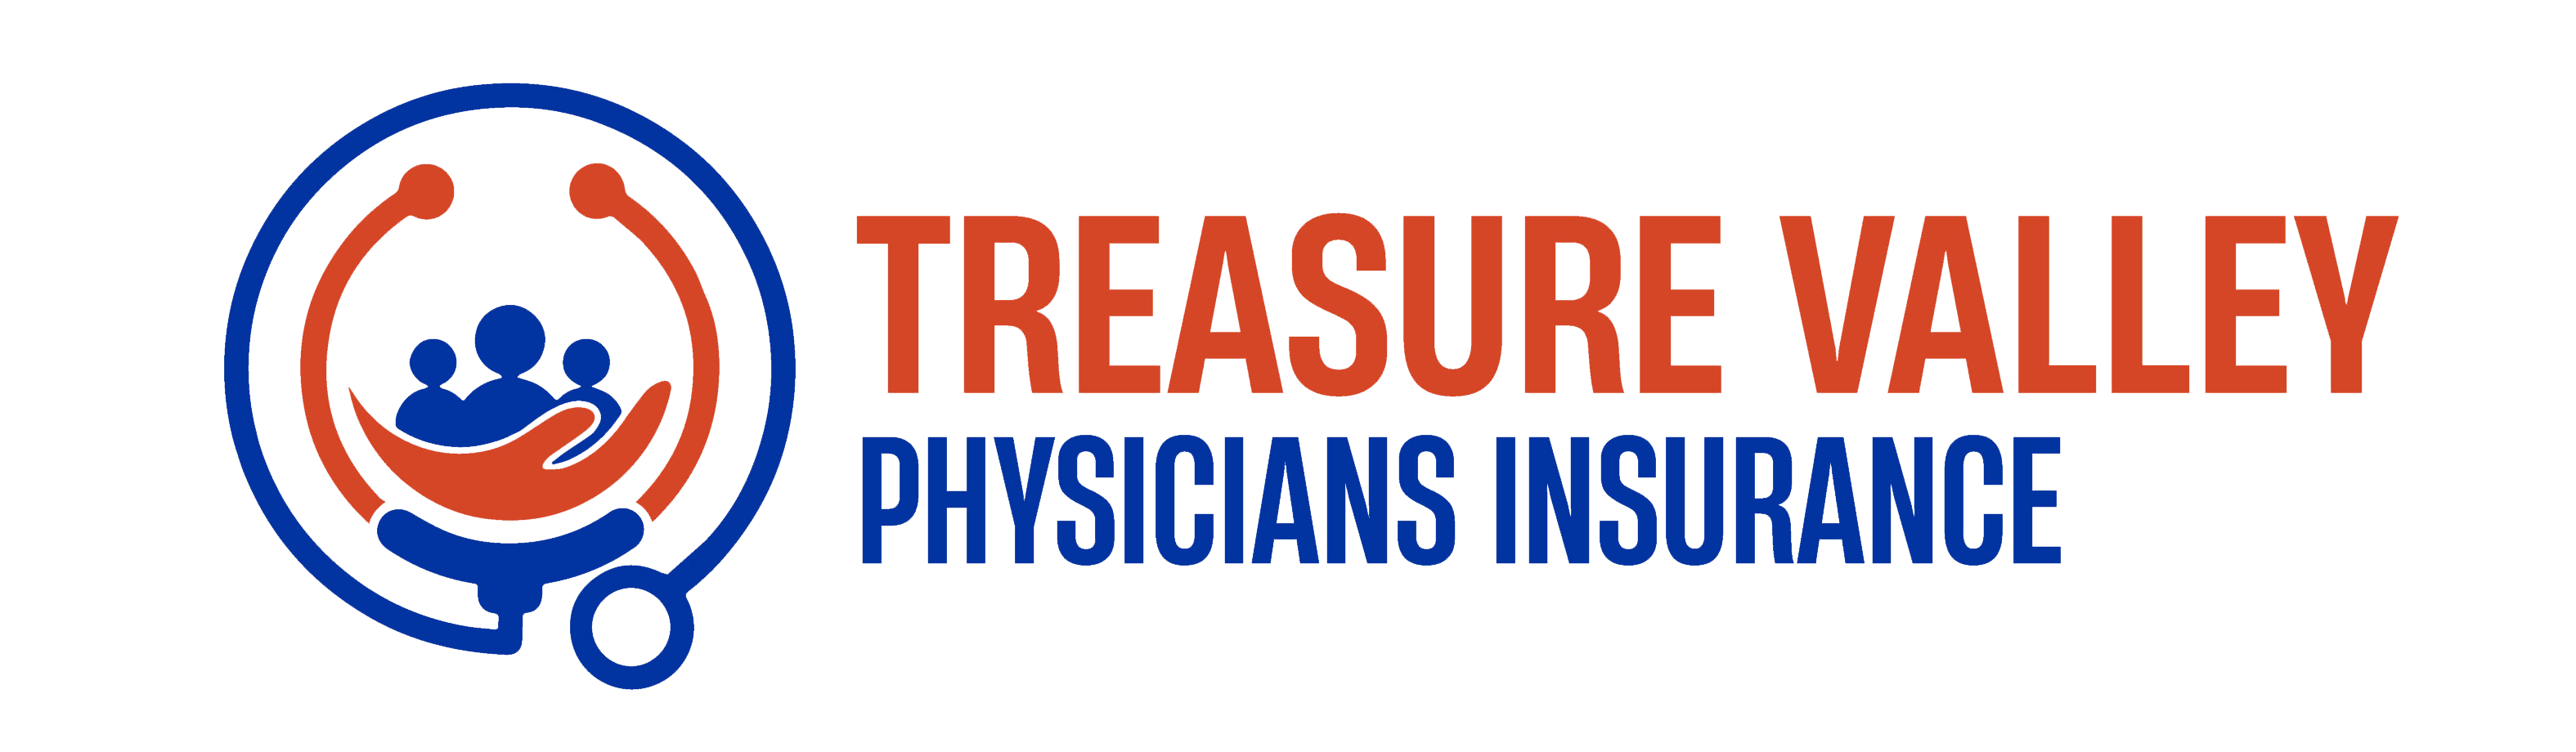 Treasure Valley Physicians Insurance